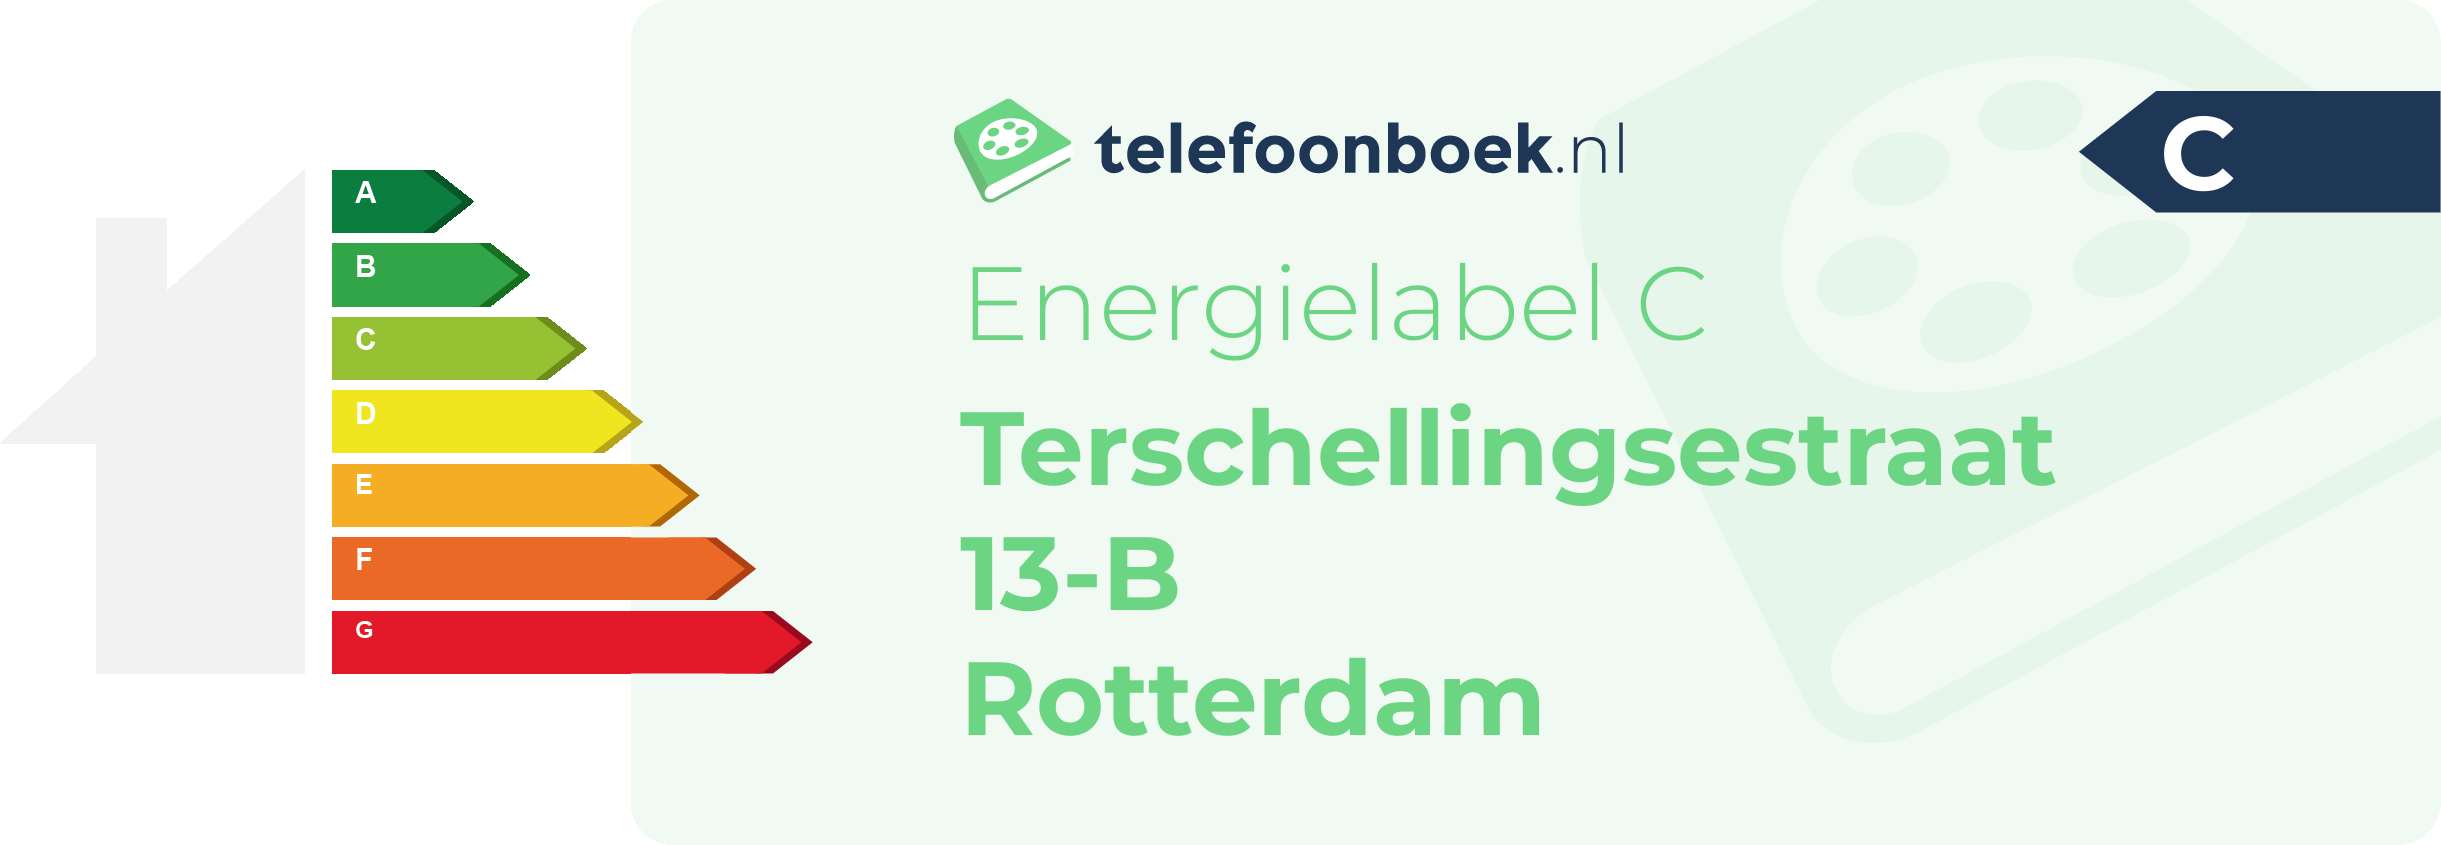 Energielabel Terschellingsestraat 13-B Rotterdam